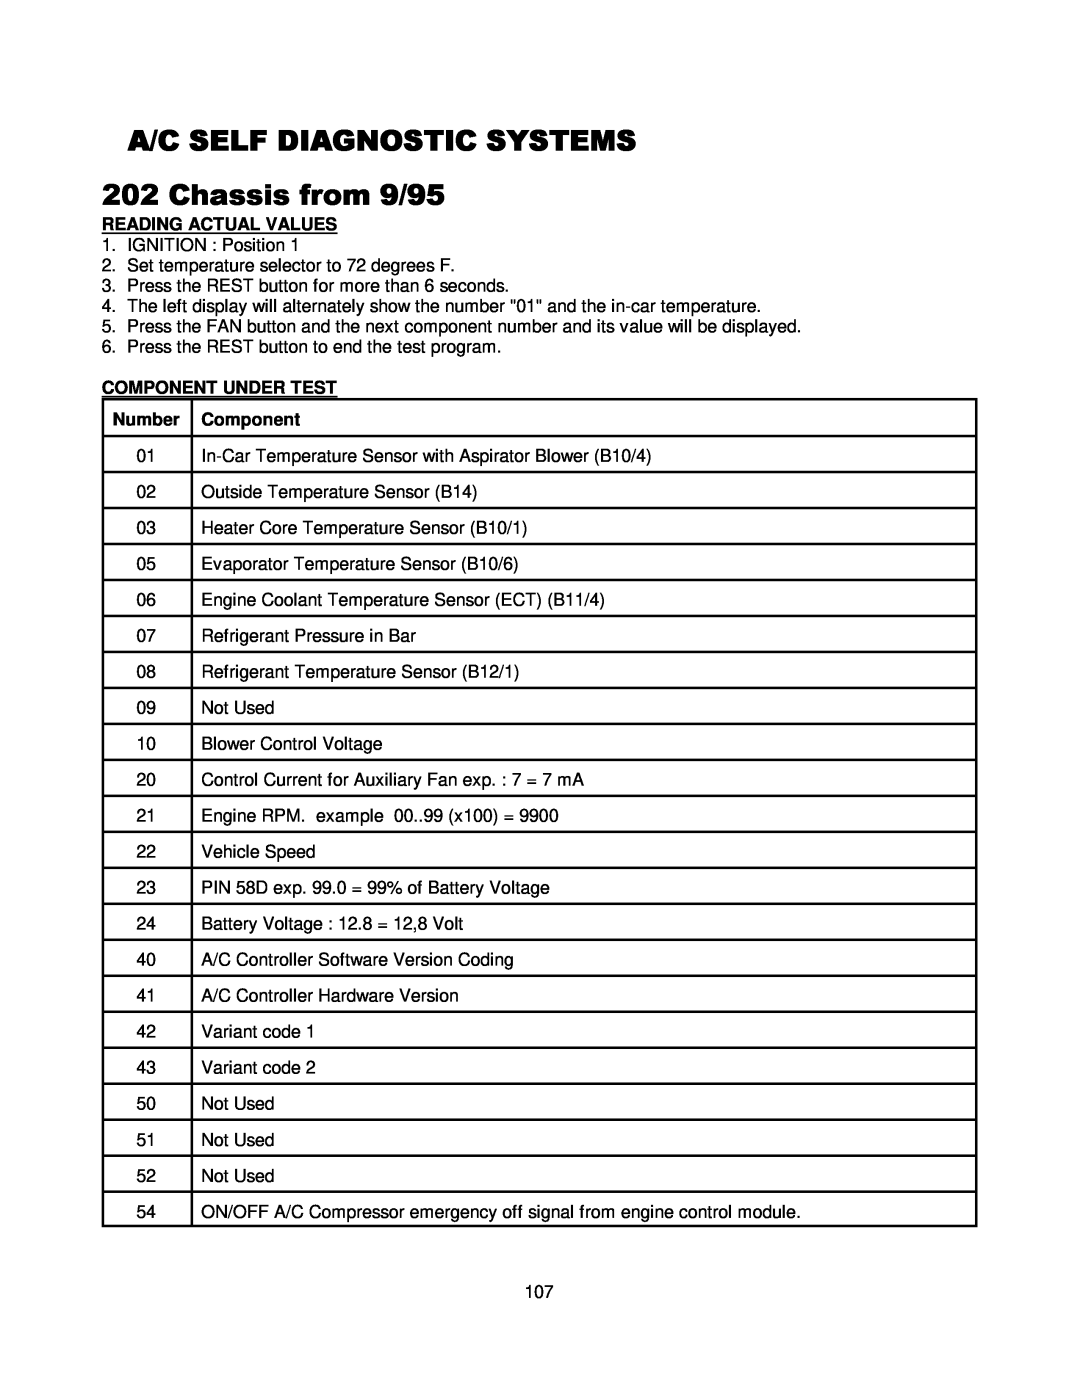 Mercedes-Benz CS1000 manual 44+!2/#779, Reading Actual Values, Component Under Test, Number 